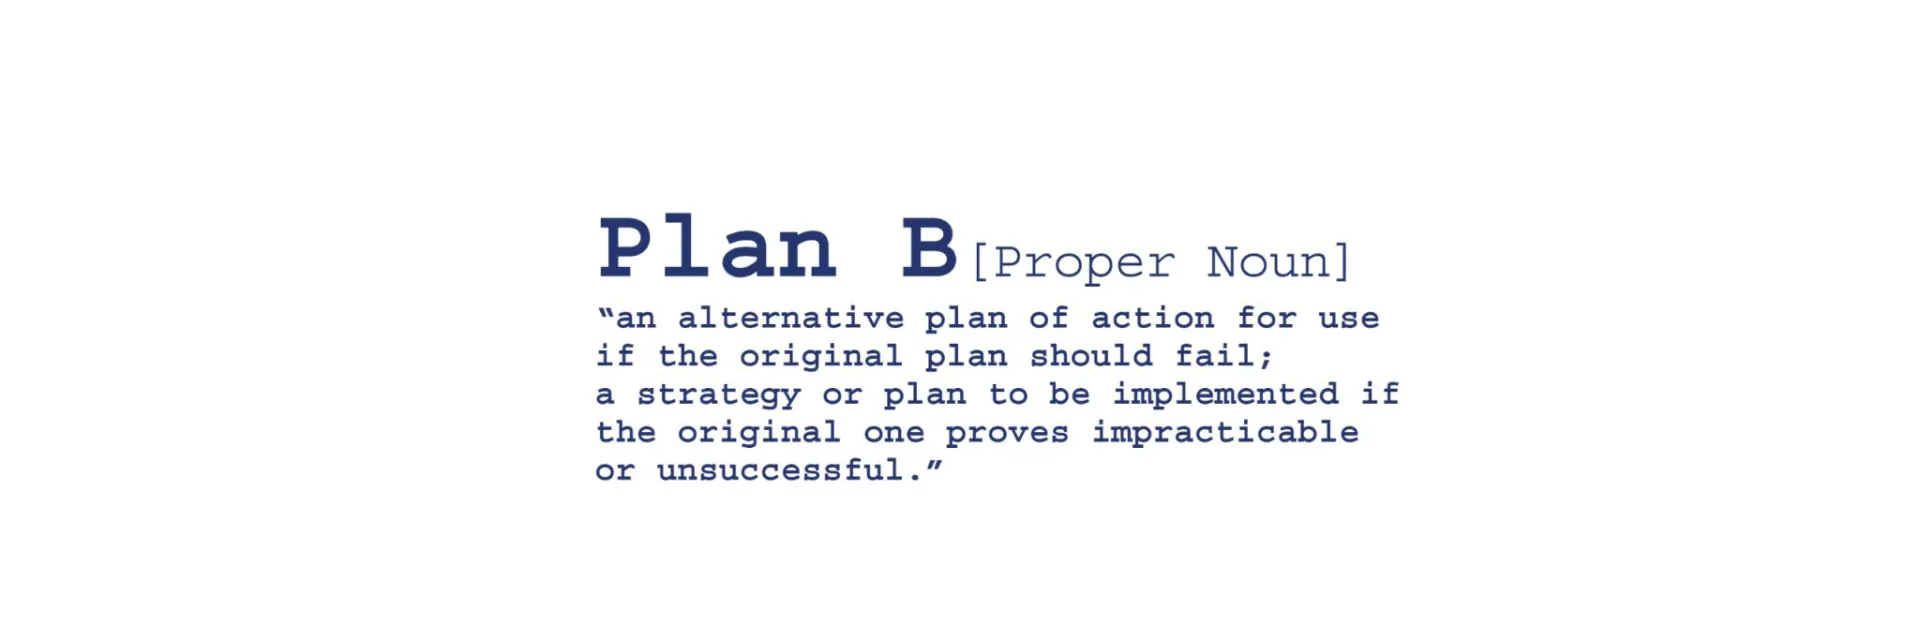 Plan B Definition 3x1.jpg